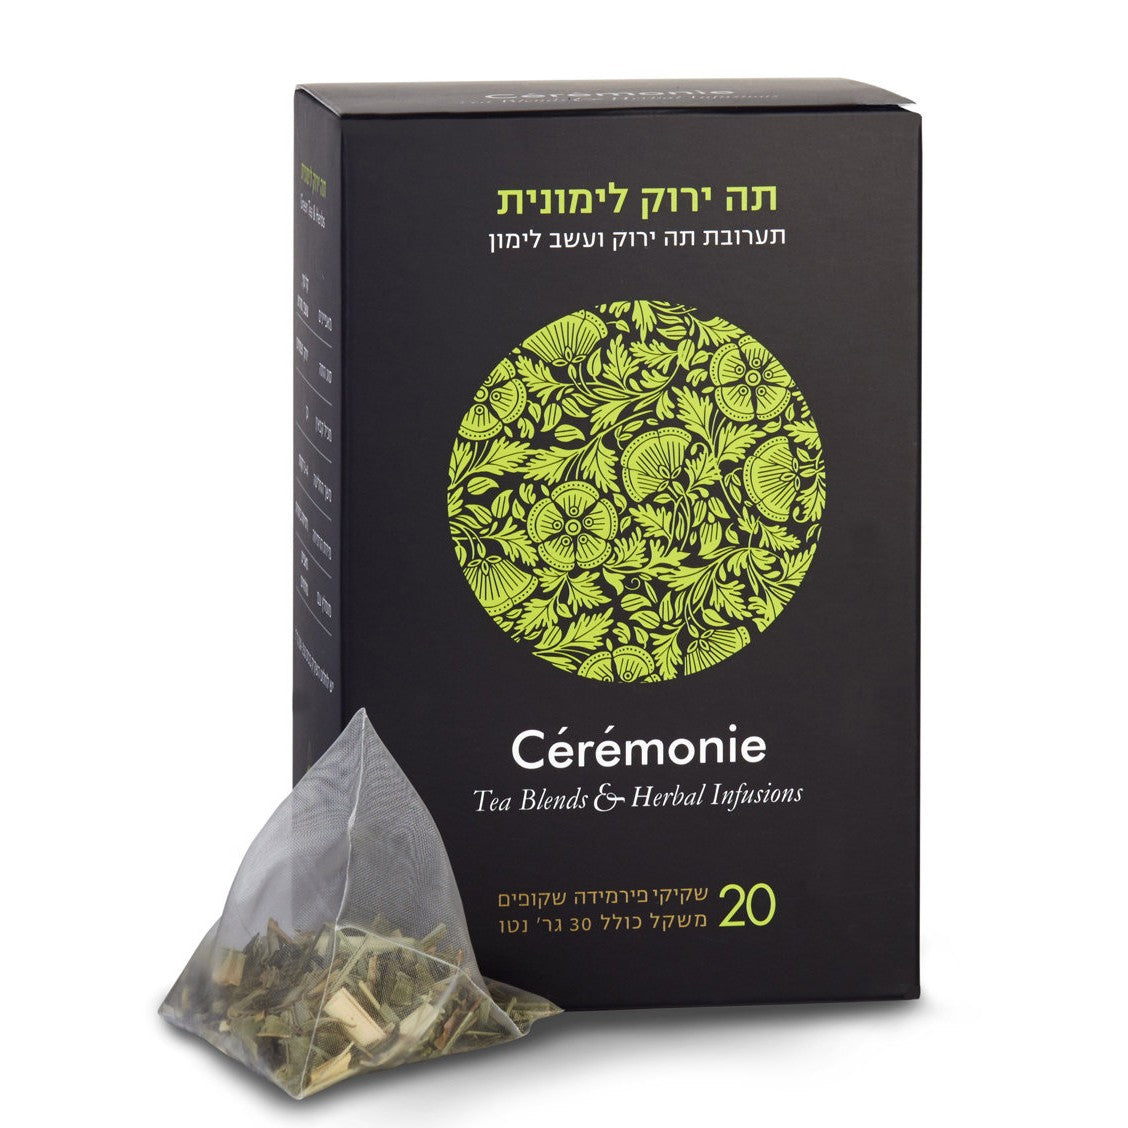 Green Tea Lemony and Louisa pyramids - Ceremonie - Israel Menu